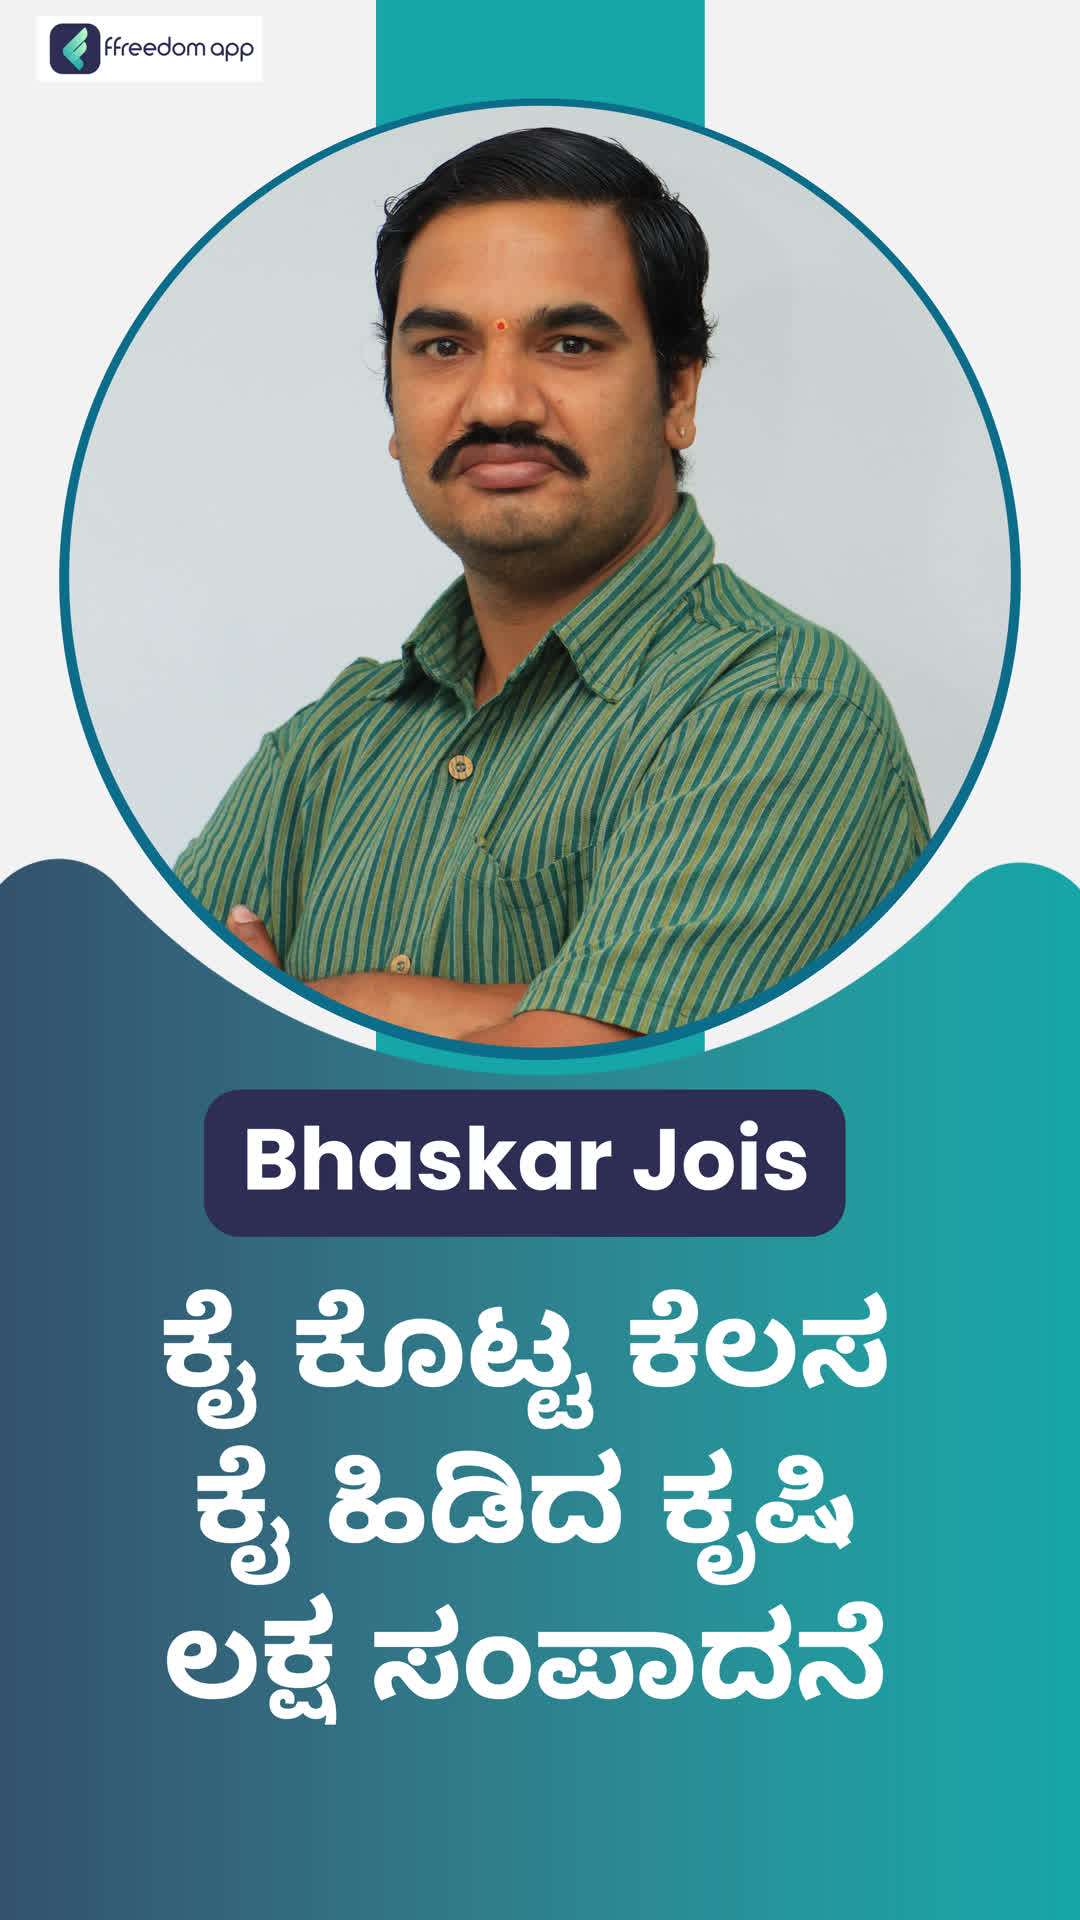 BHASKAR JOIS's Honest Review of ffreedom app - Shimoga ,Karnataka